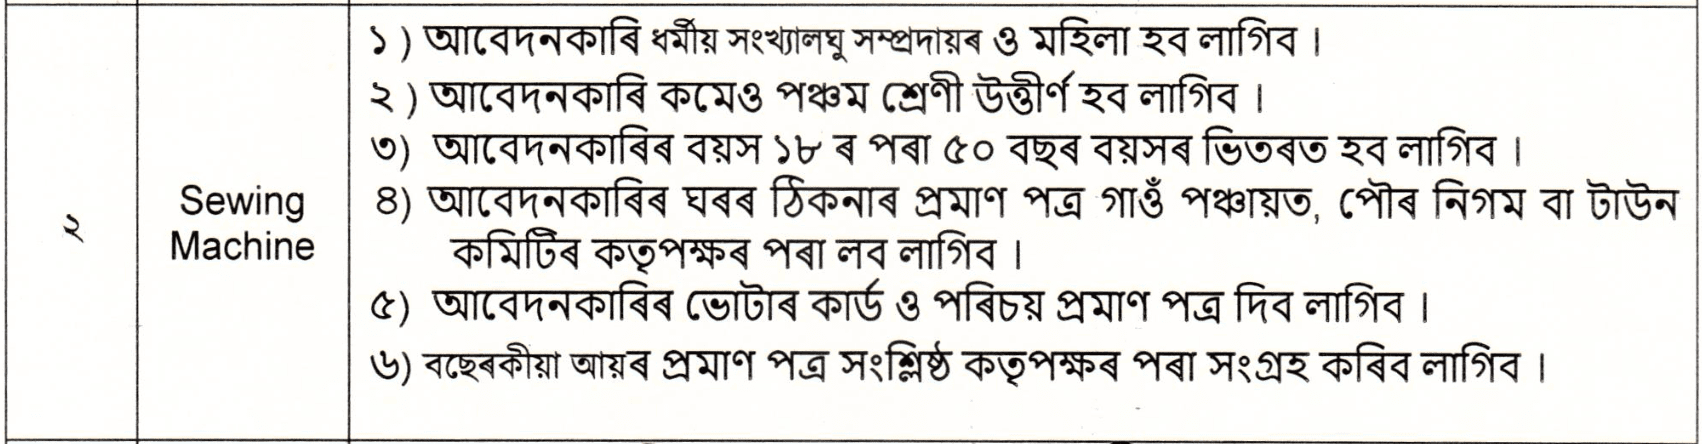 Assam Free Silai Machine Scheme Eligibility Criteria